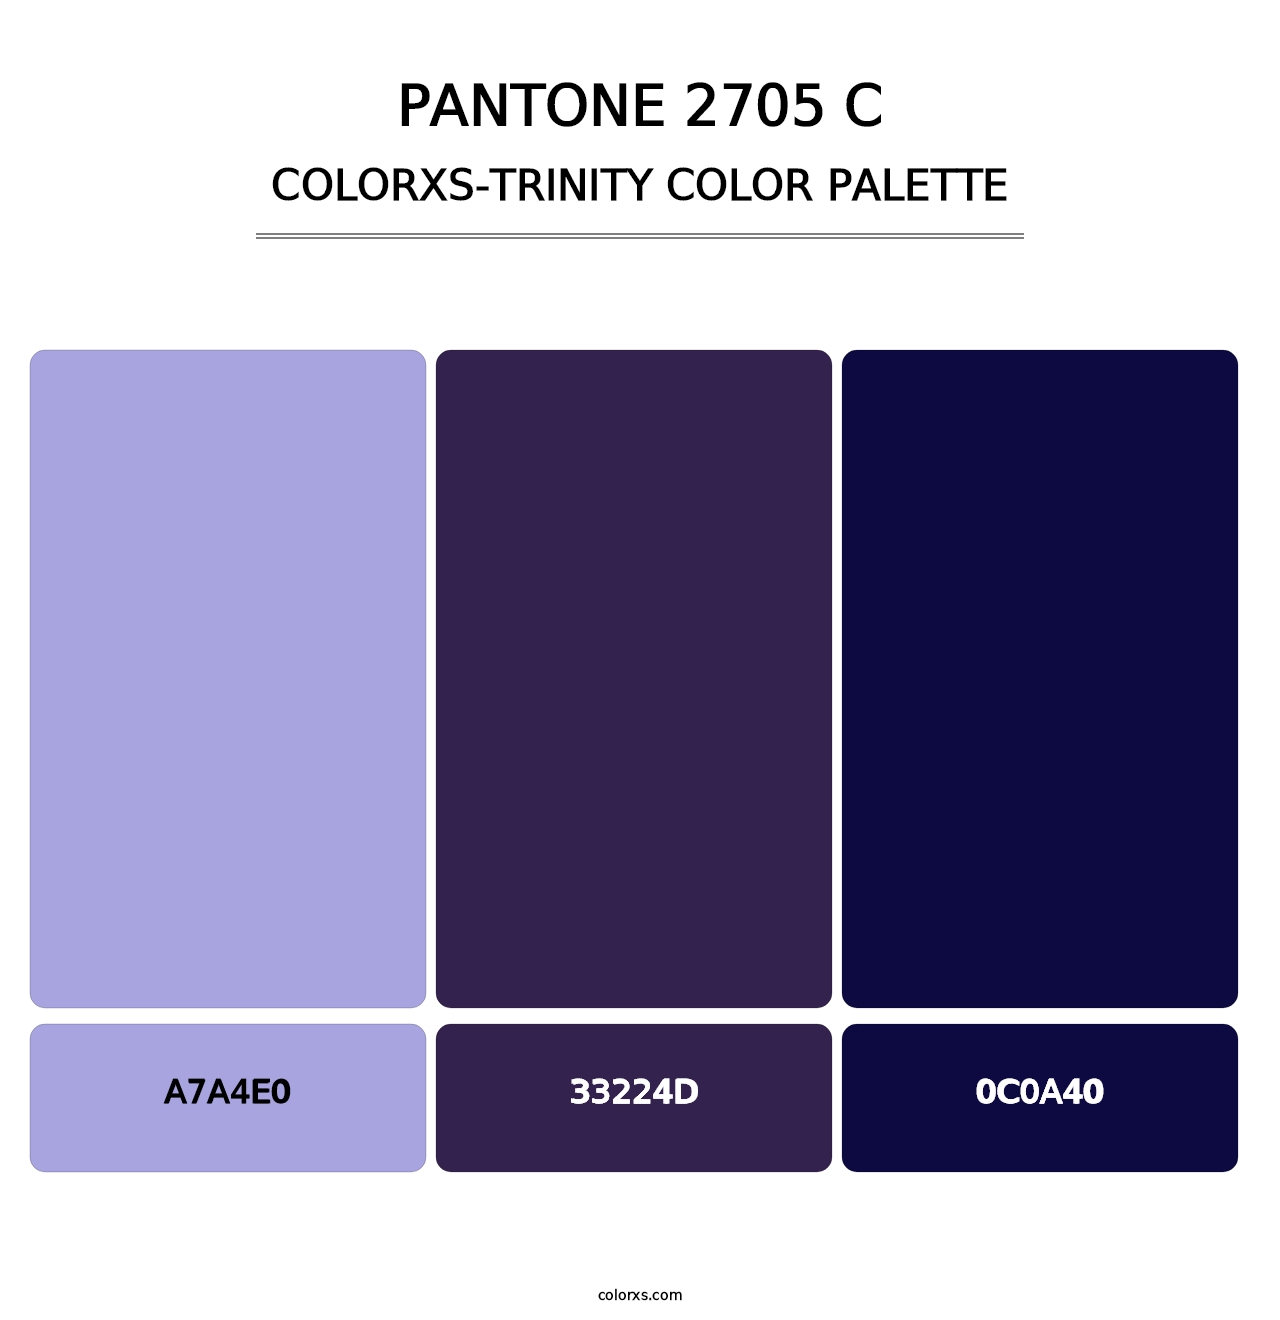 PANTONE 2705 C - Colorxs Trinity Palette